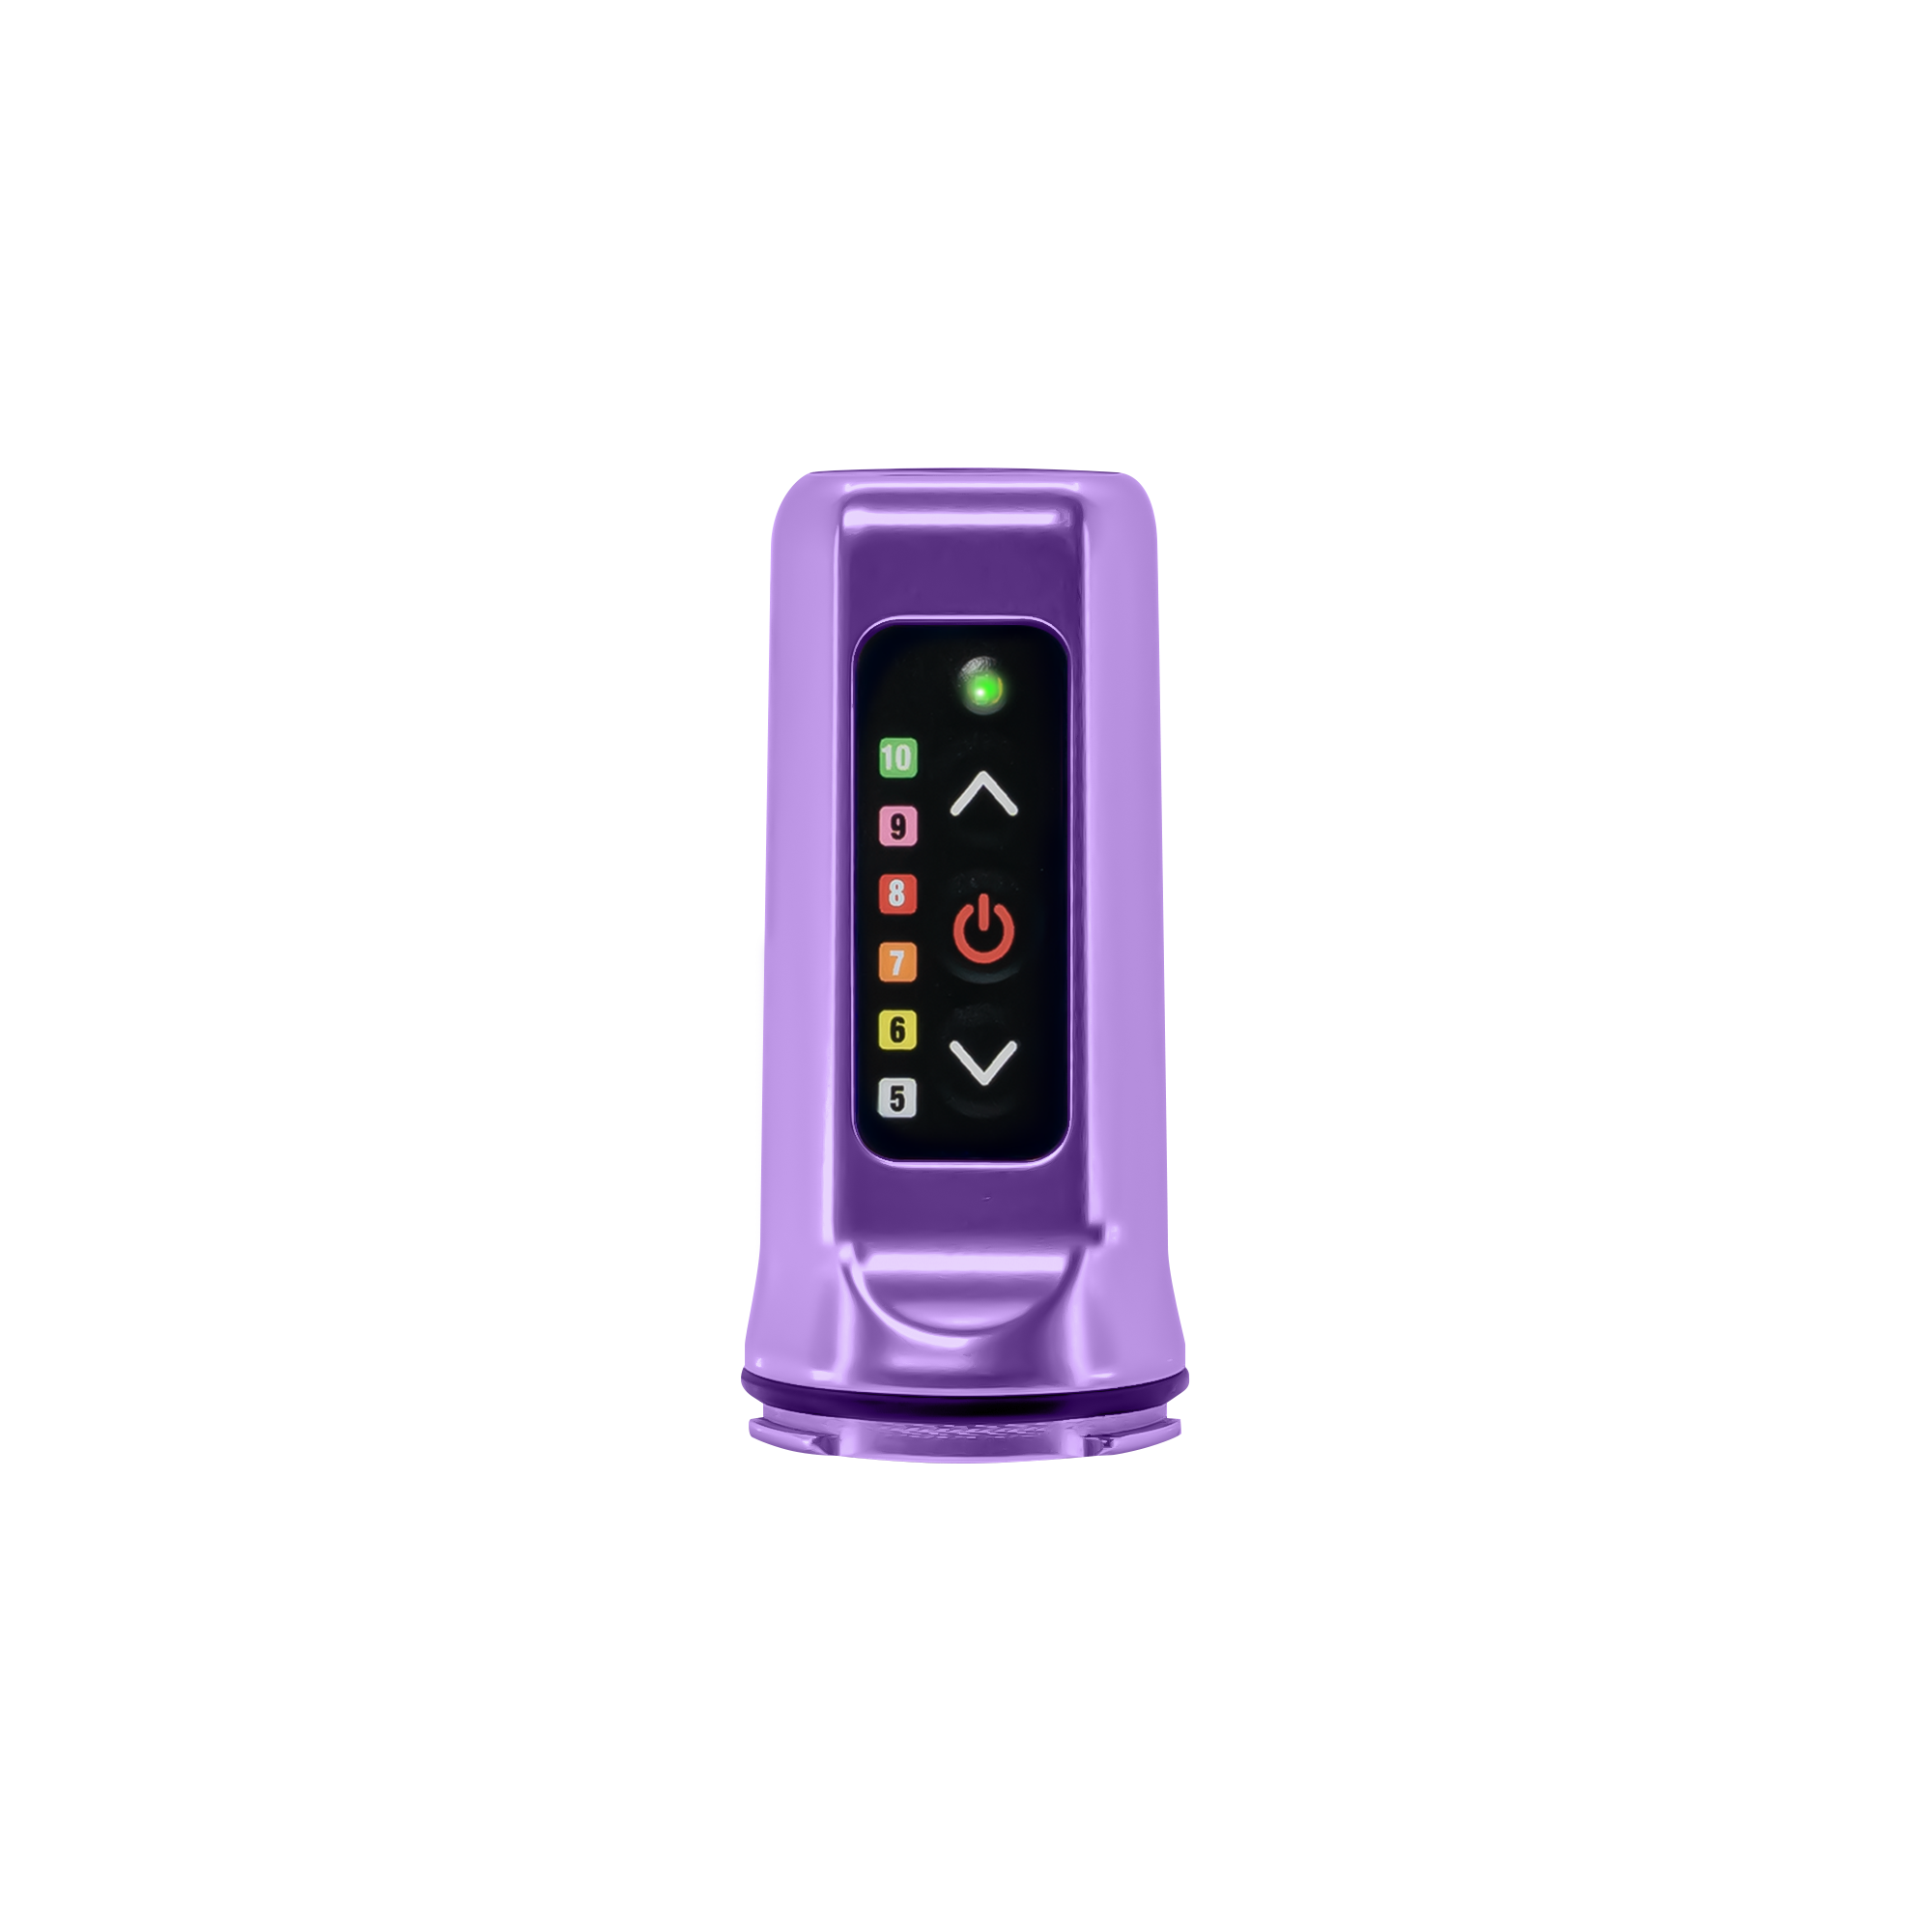 Perma Pen Signature PMU Machine — Lavender — 1 or 2 Battery Pack